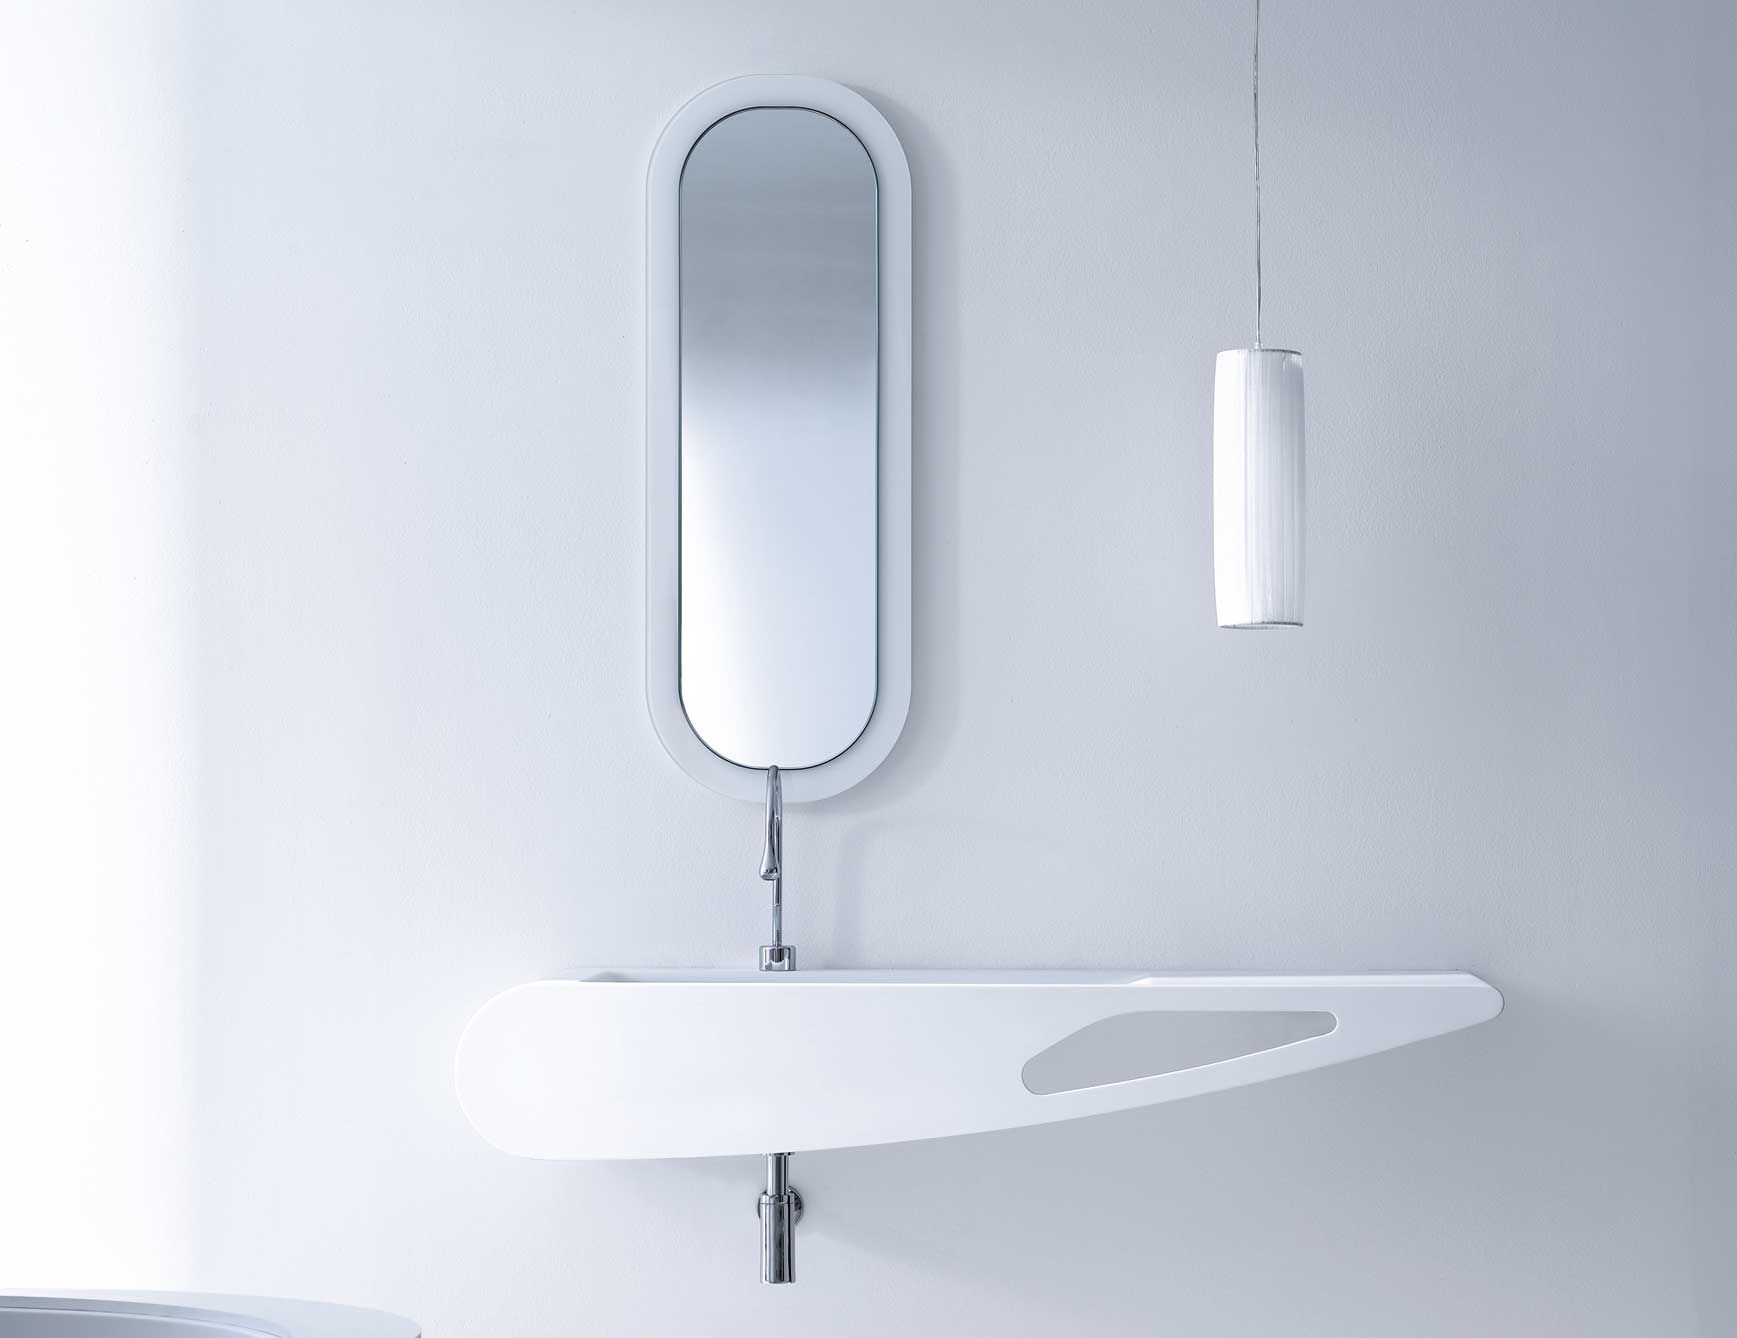 Goccia modern luxury basin sink with white resin